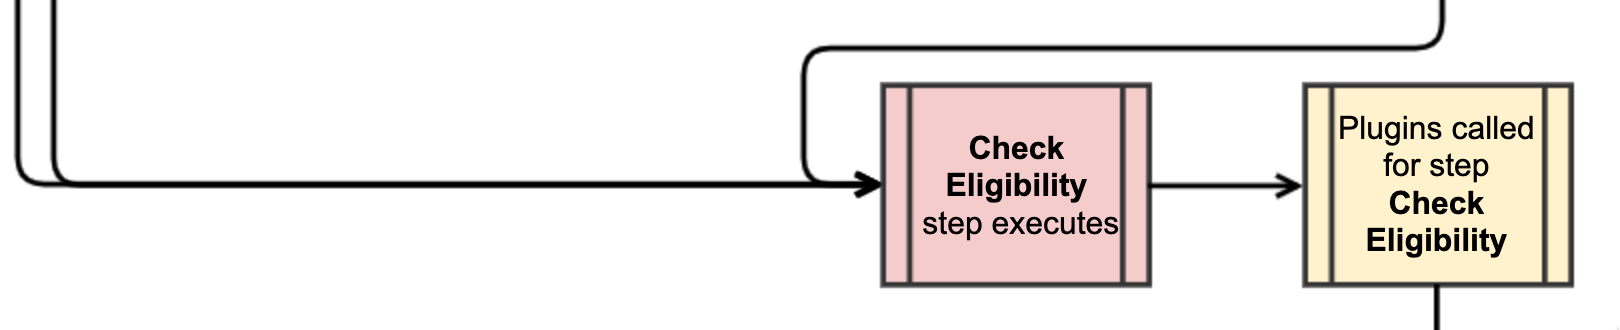 Step 8. Check Eligibility Flow diagram